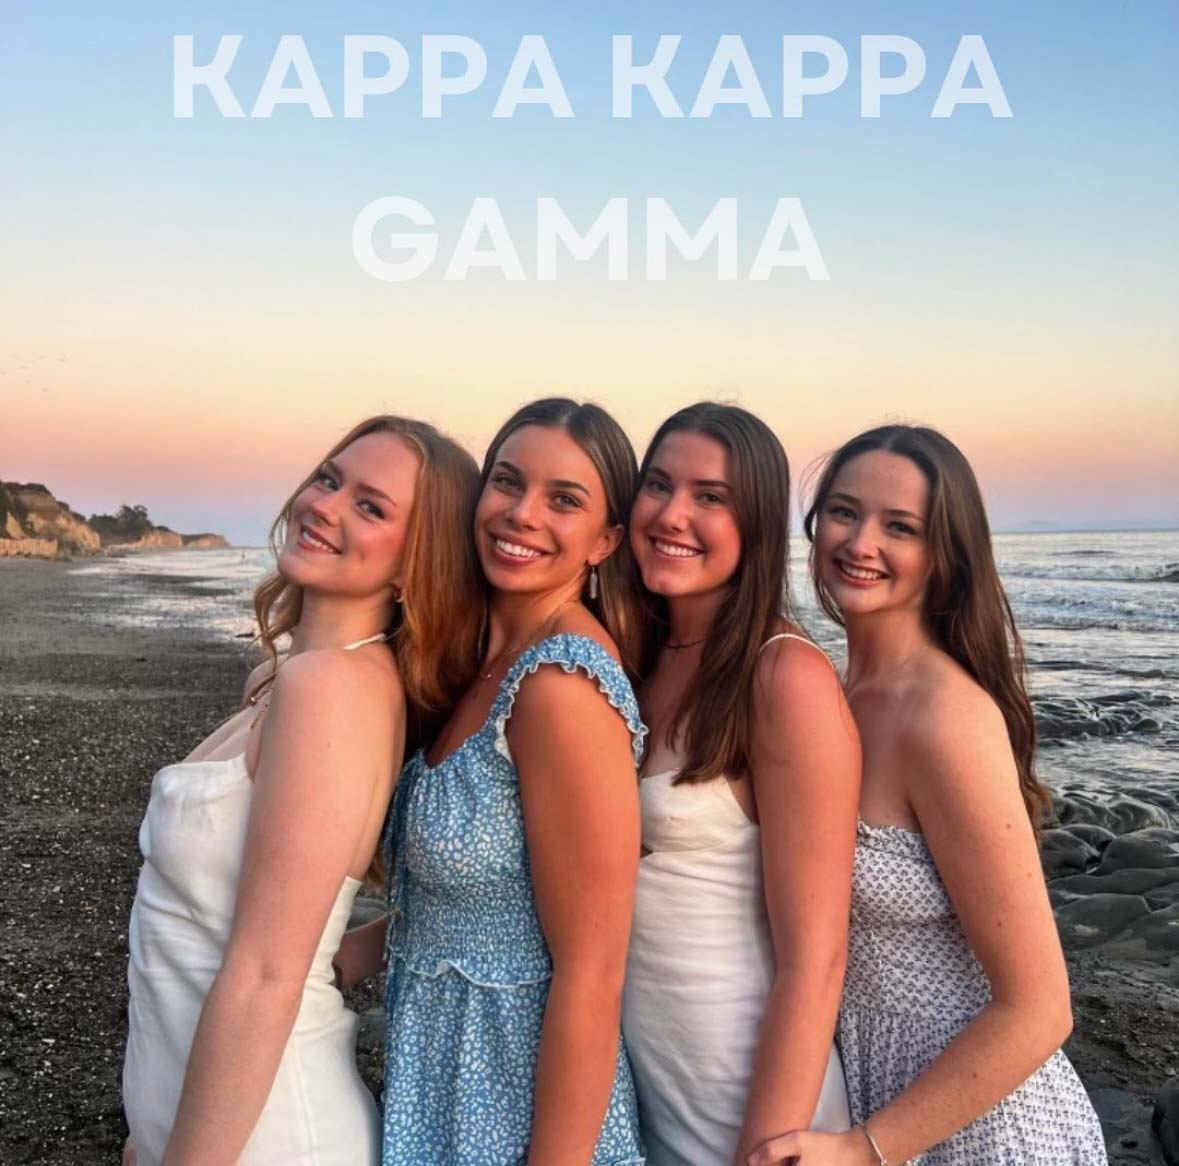 Kappa Kappa Gamma members